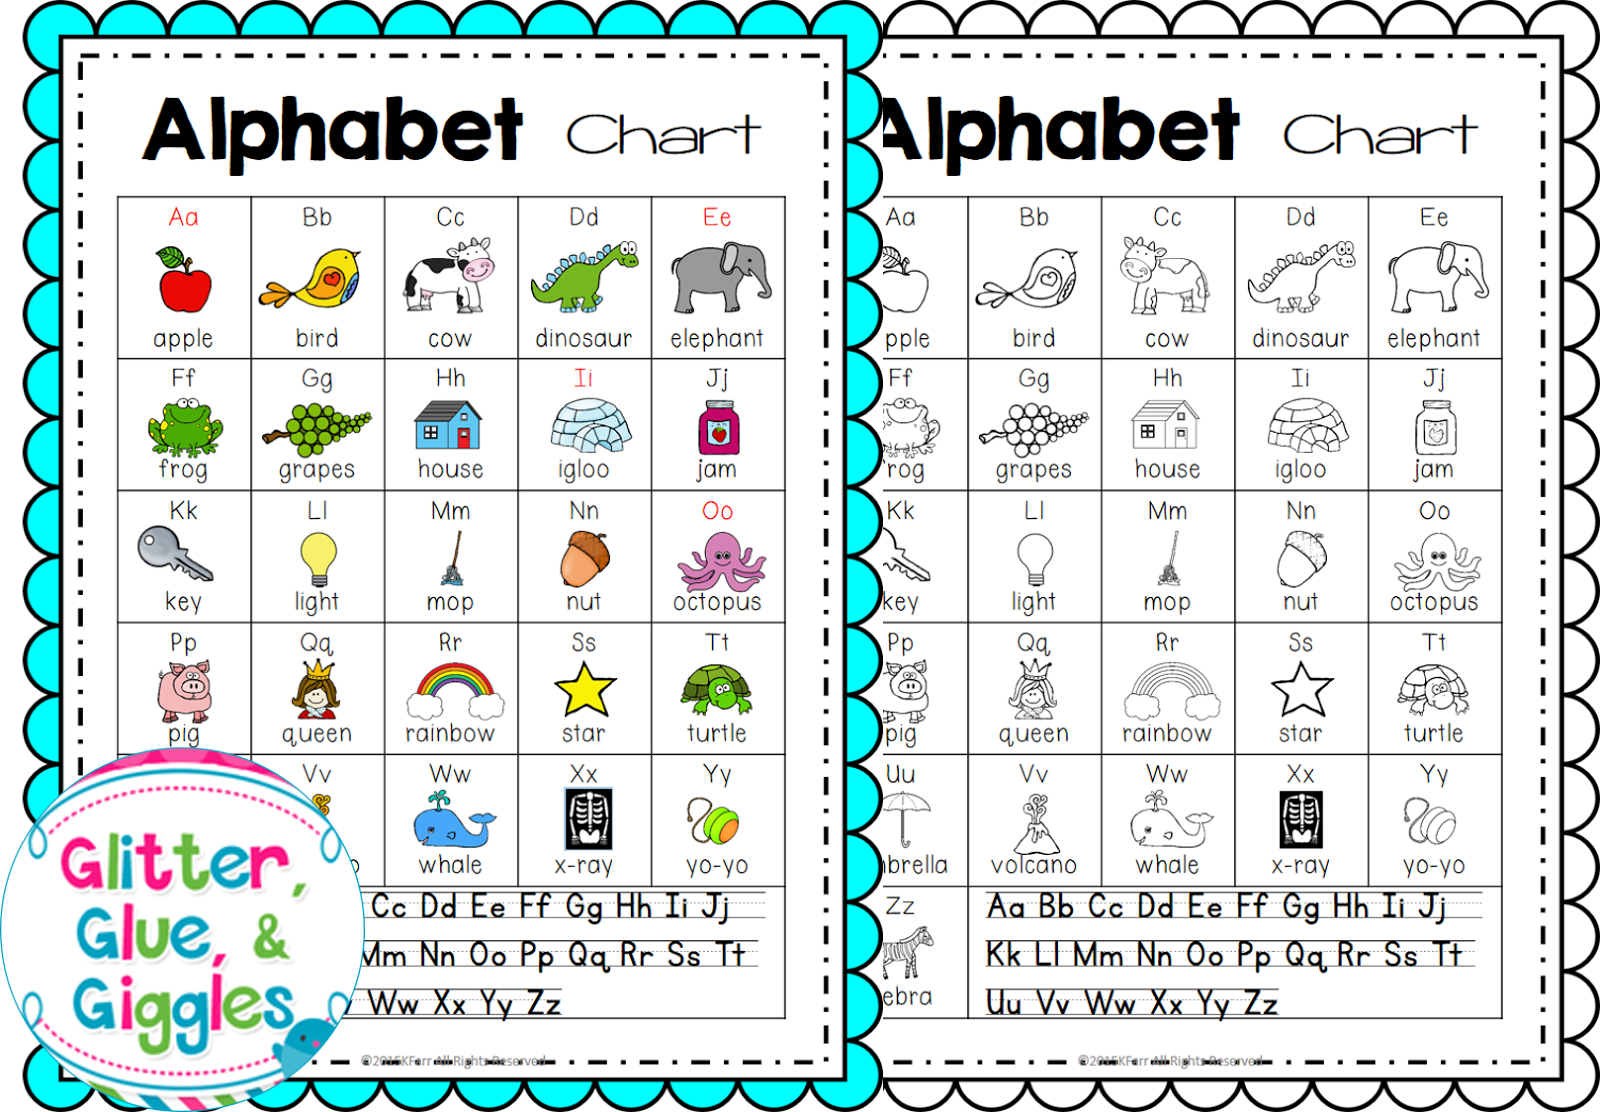 Glitter, Glue & Giggles: Alphabet Chart: FREE!